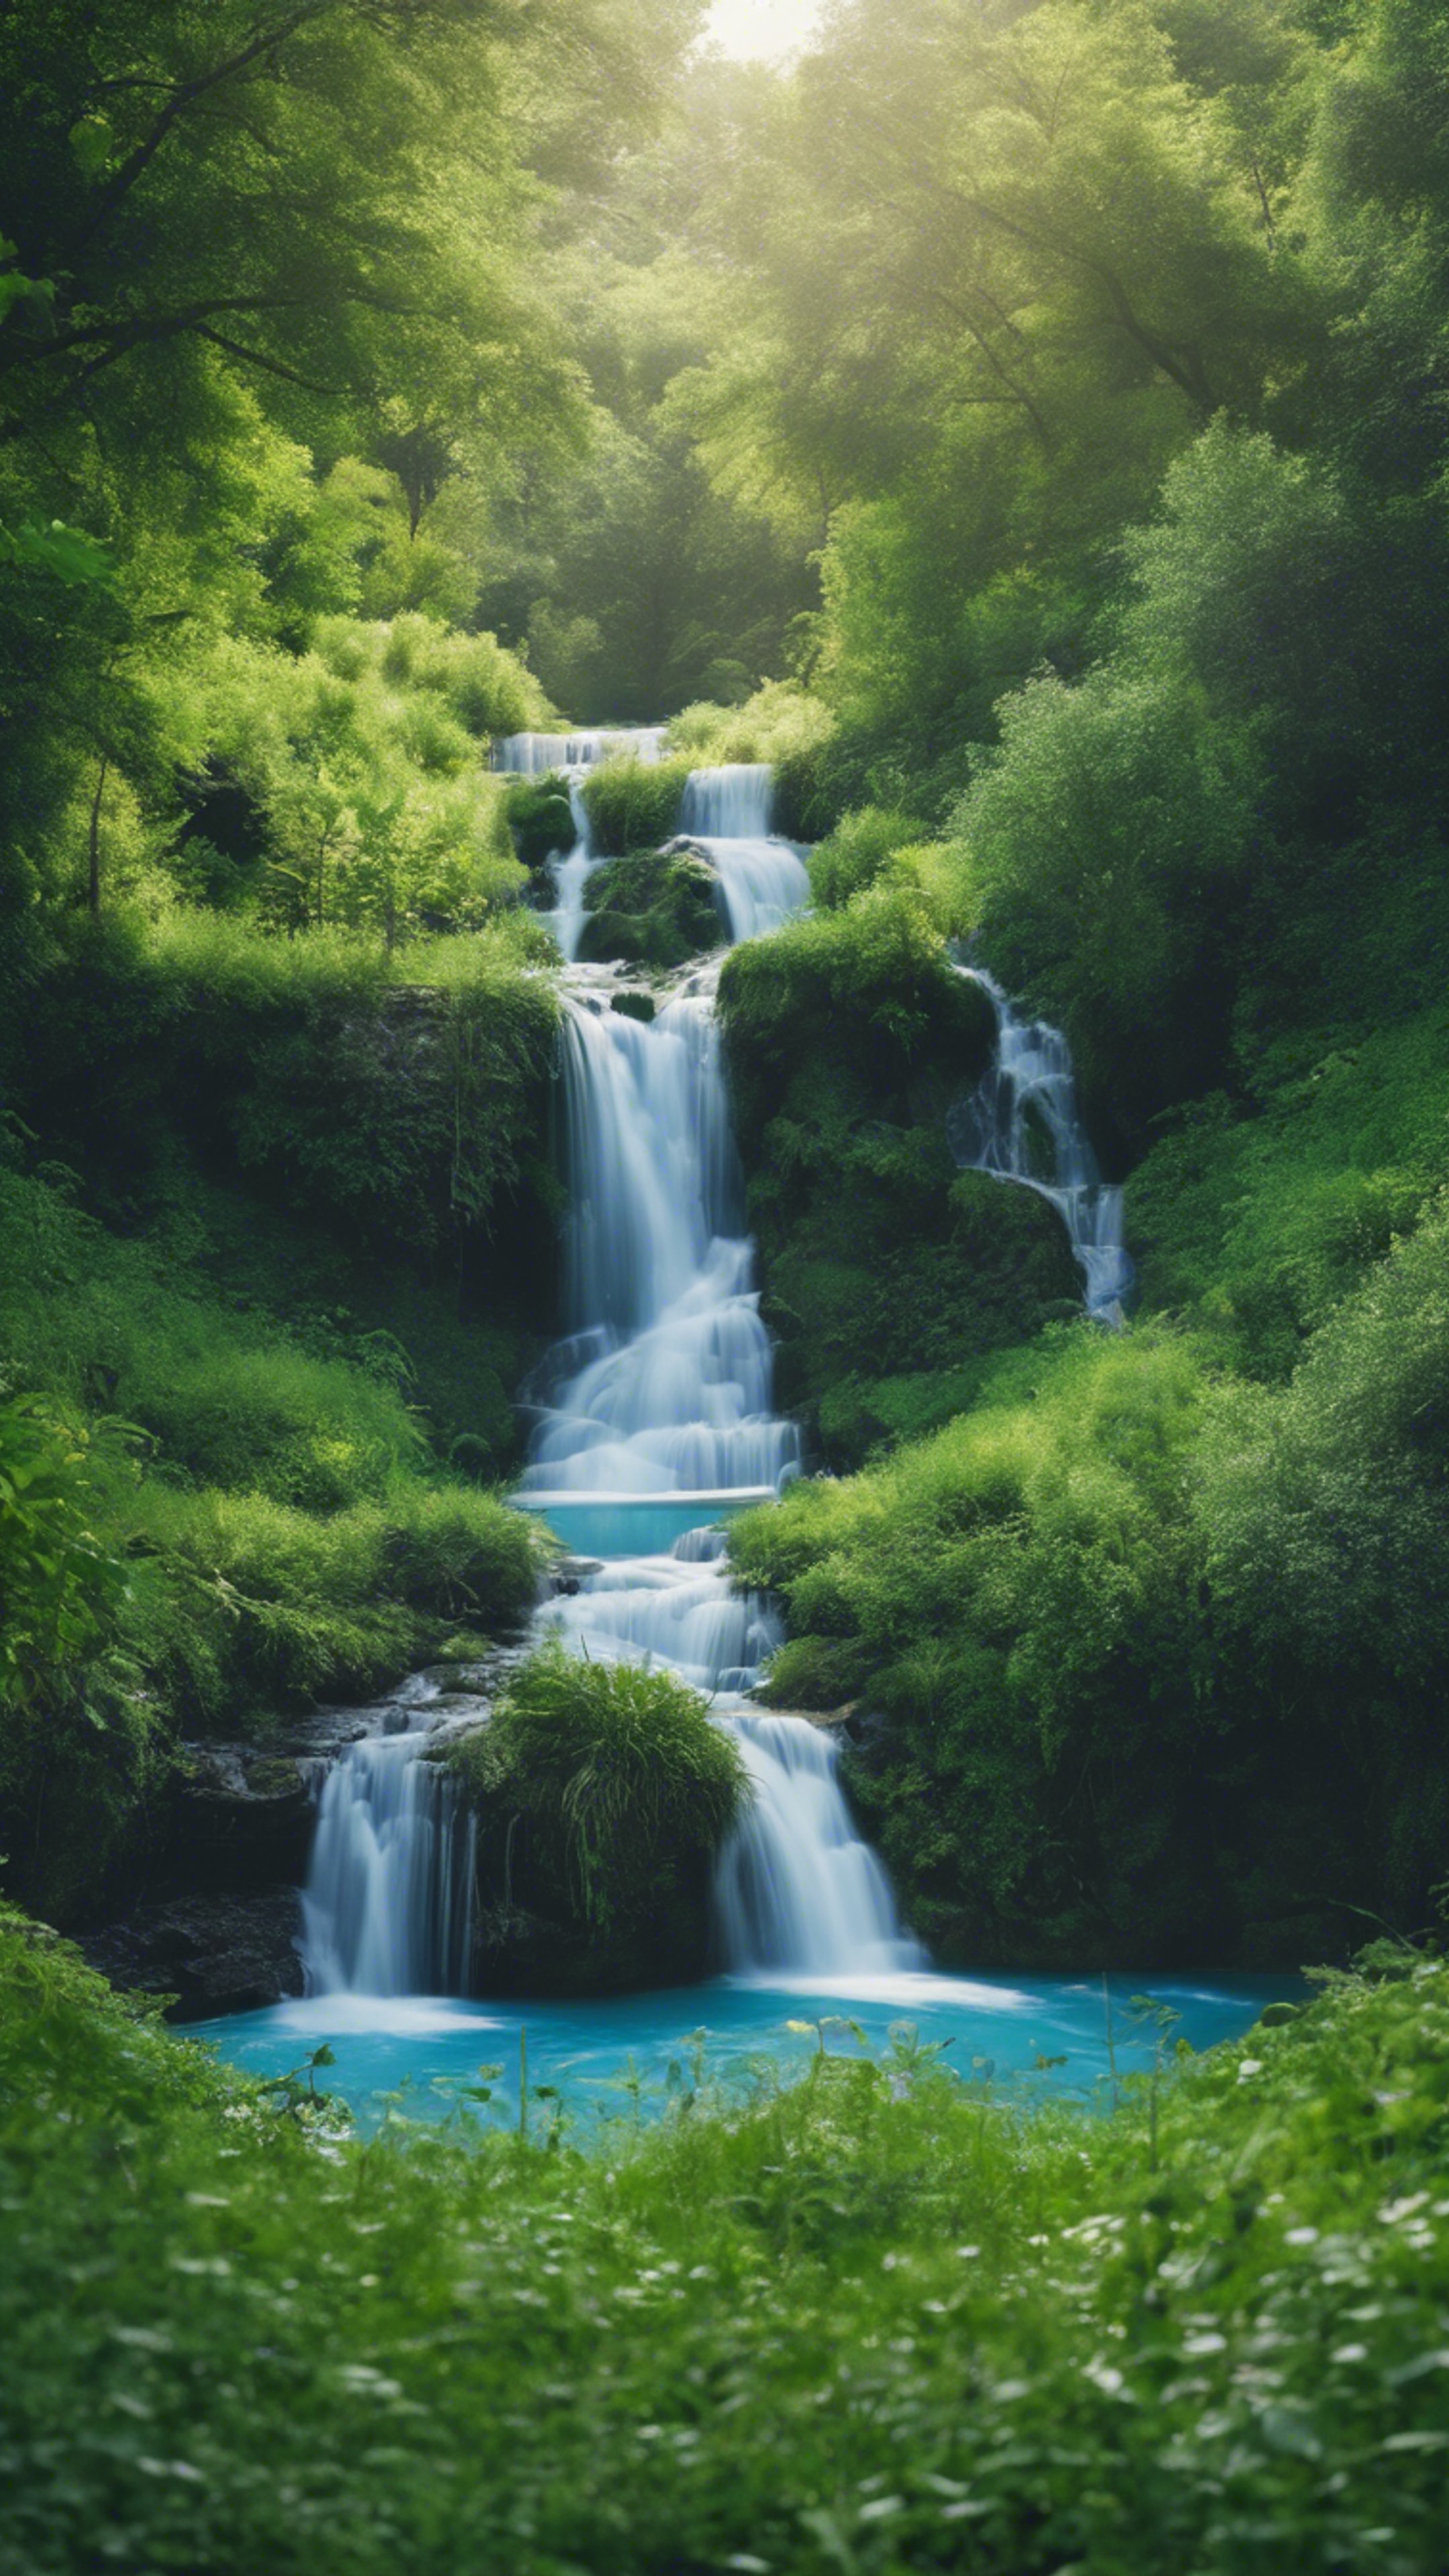 A cool blue waterfall cascading into a lush green meadow. Tapeta na zeď[661f80b9c31c460db5eb]